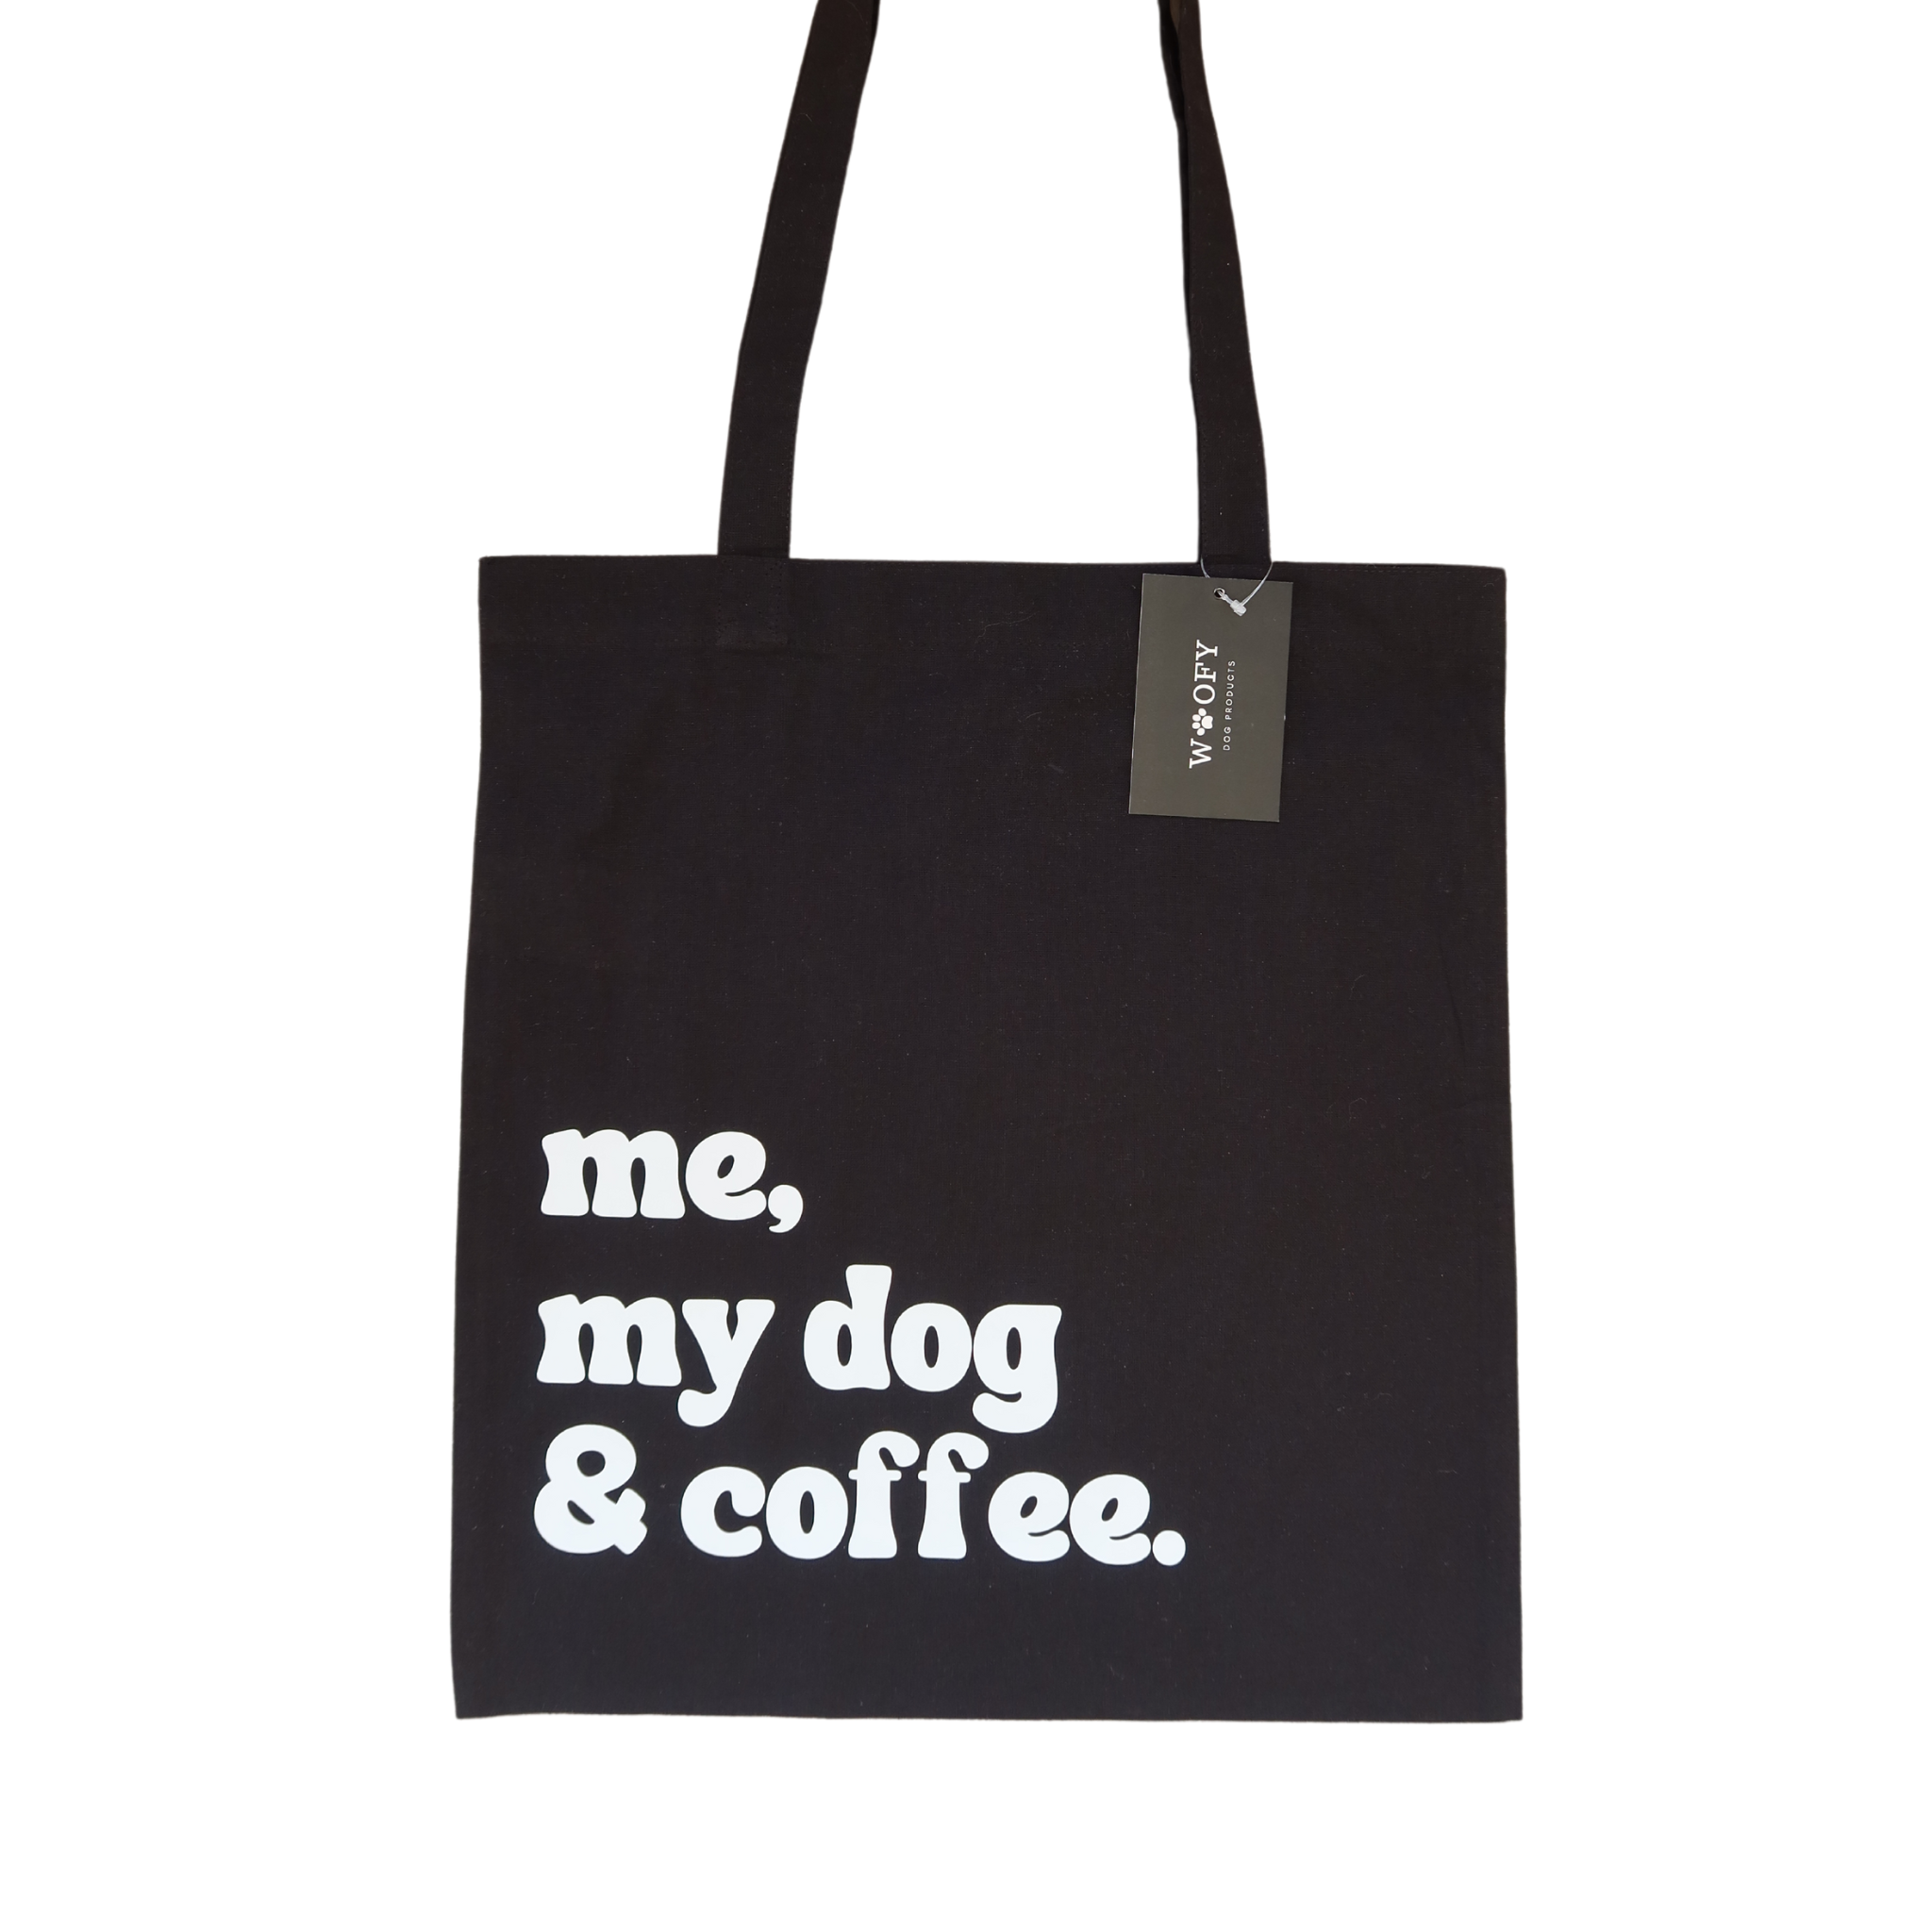 'Me, my dog & coffee' tote bag